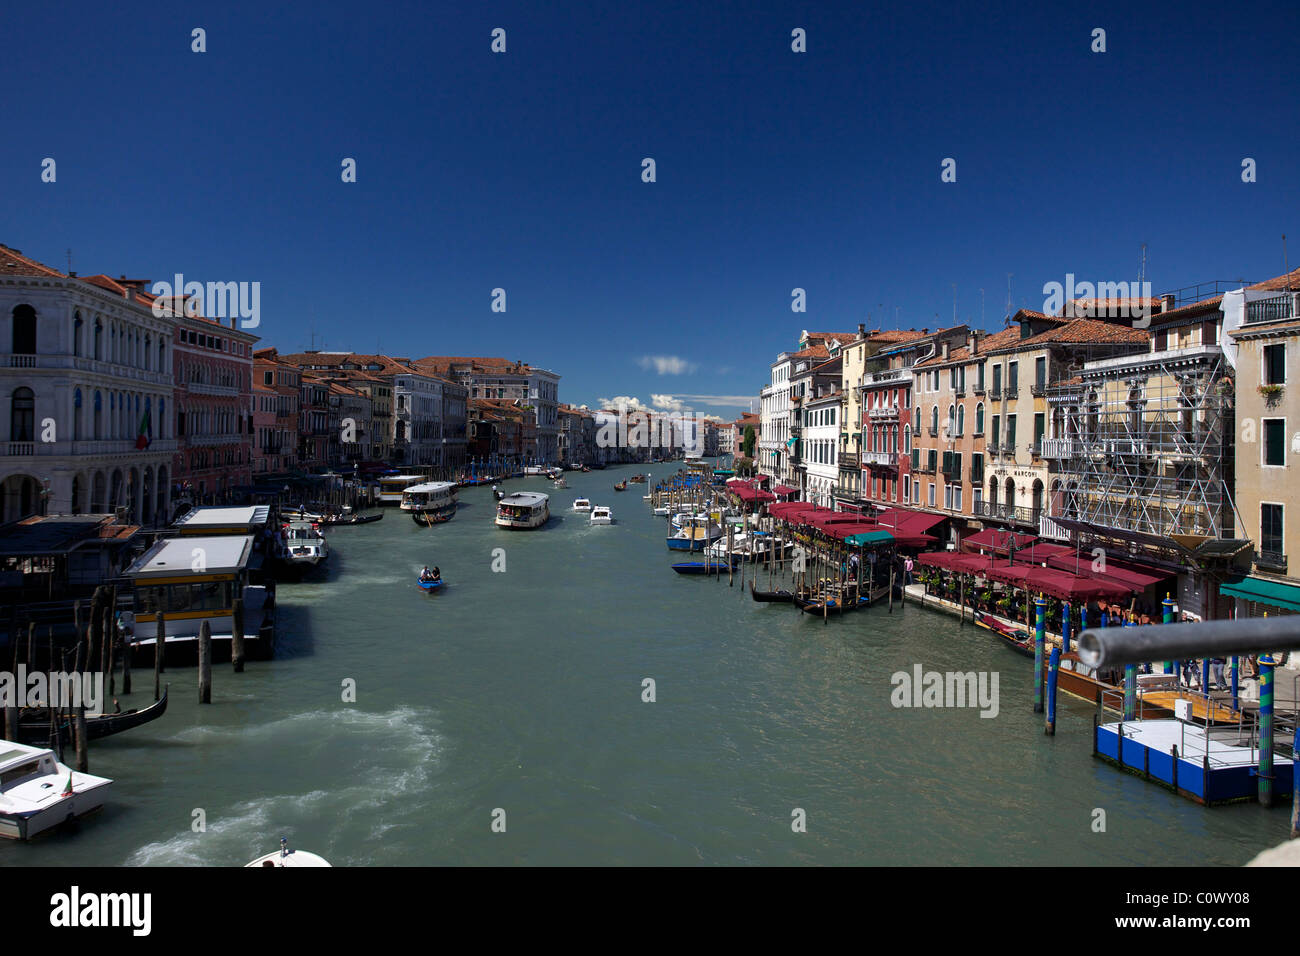 River Venice in Venice italy as seen from the Ponte Rialto (Rialto Bridge) Stock Photo